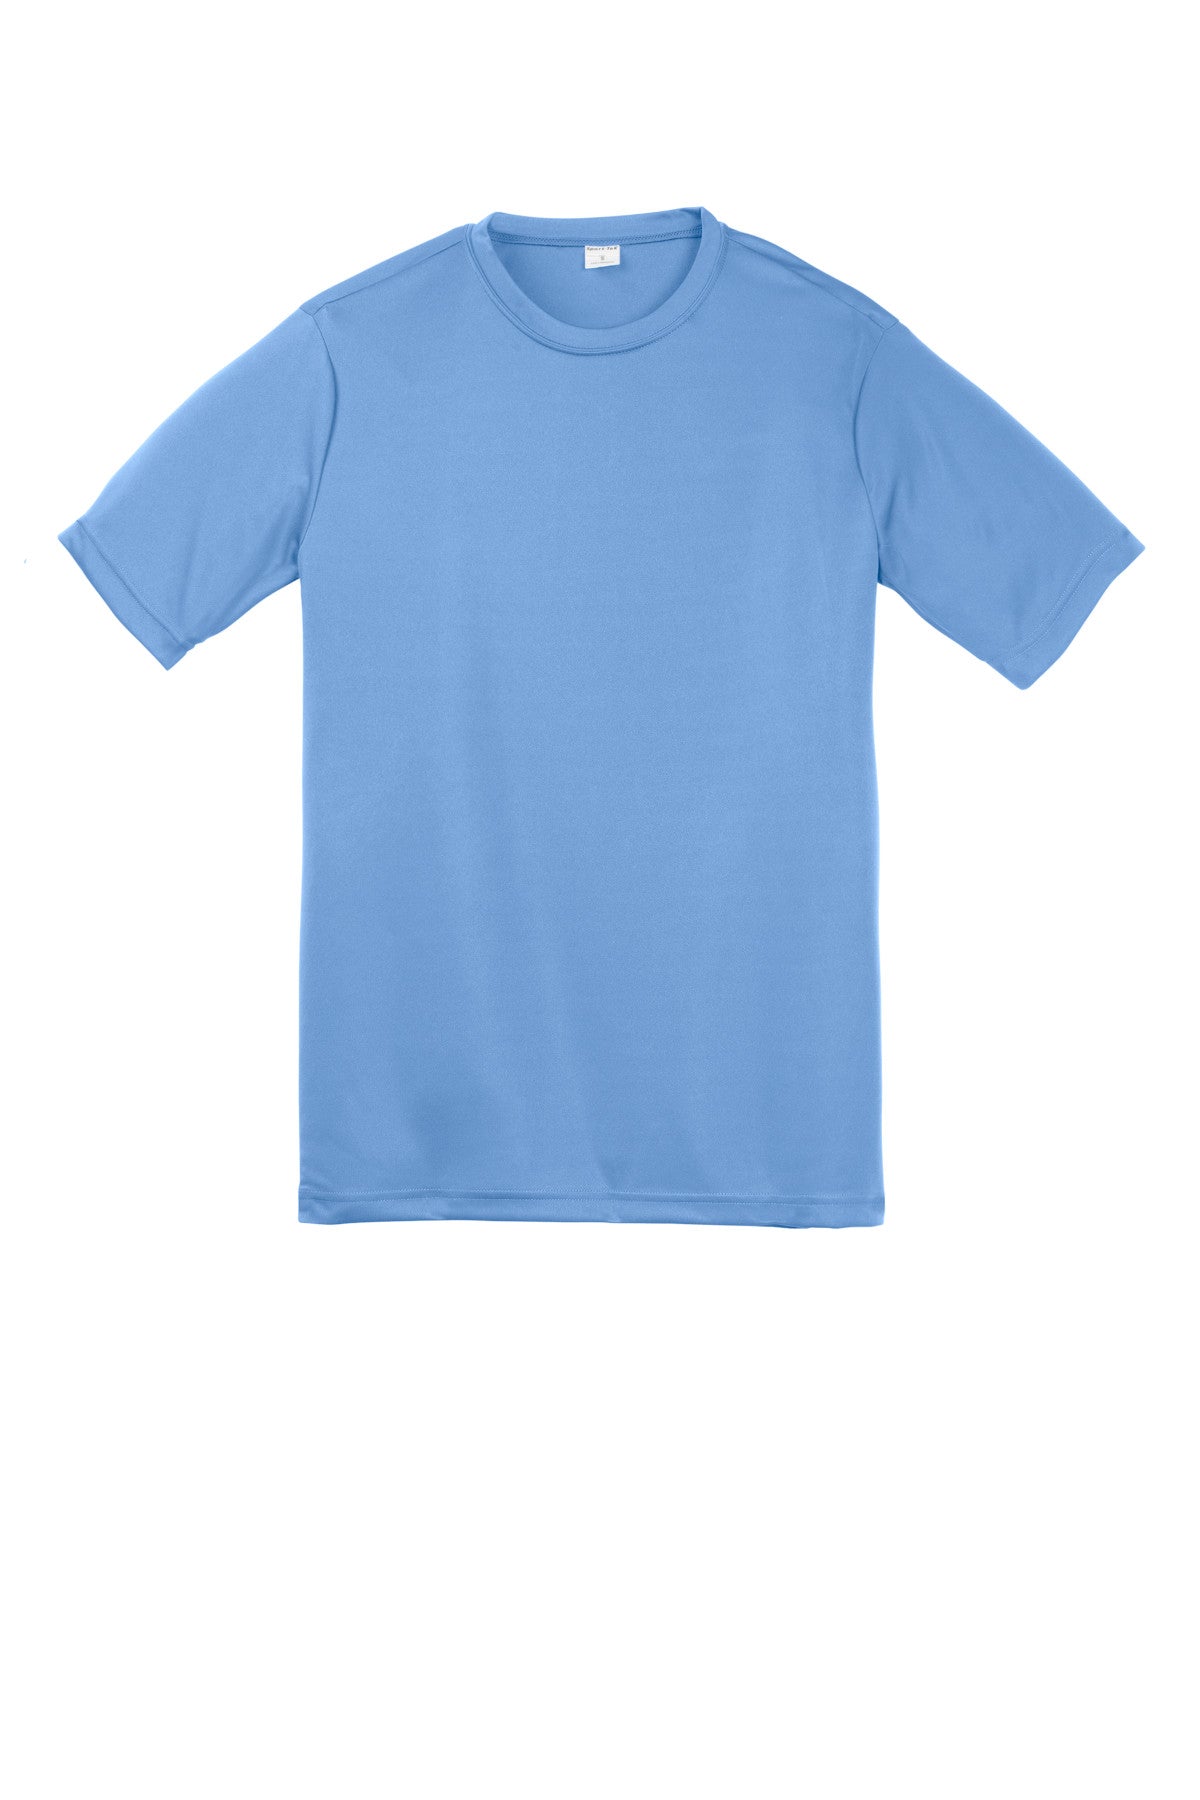 Sport-Tek Yst350 Polyester Youth T-Shirt Yth Small / Carolina Blue